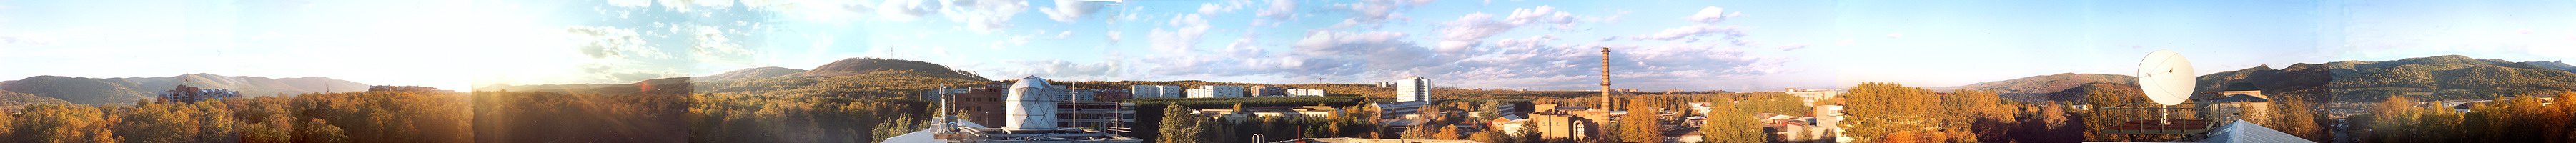 Панорама с крыши Корпуса экологии.jpg - 216kB